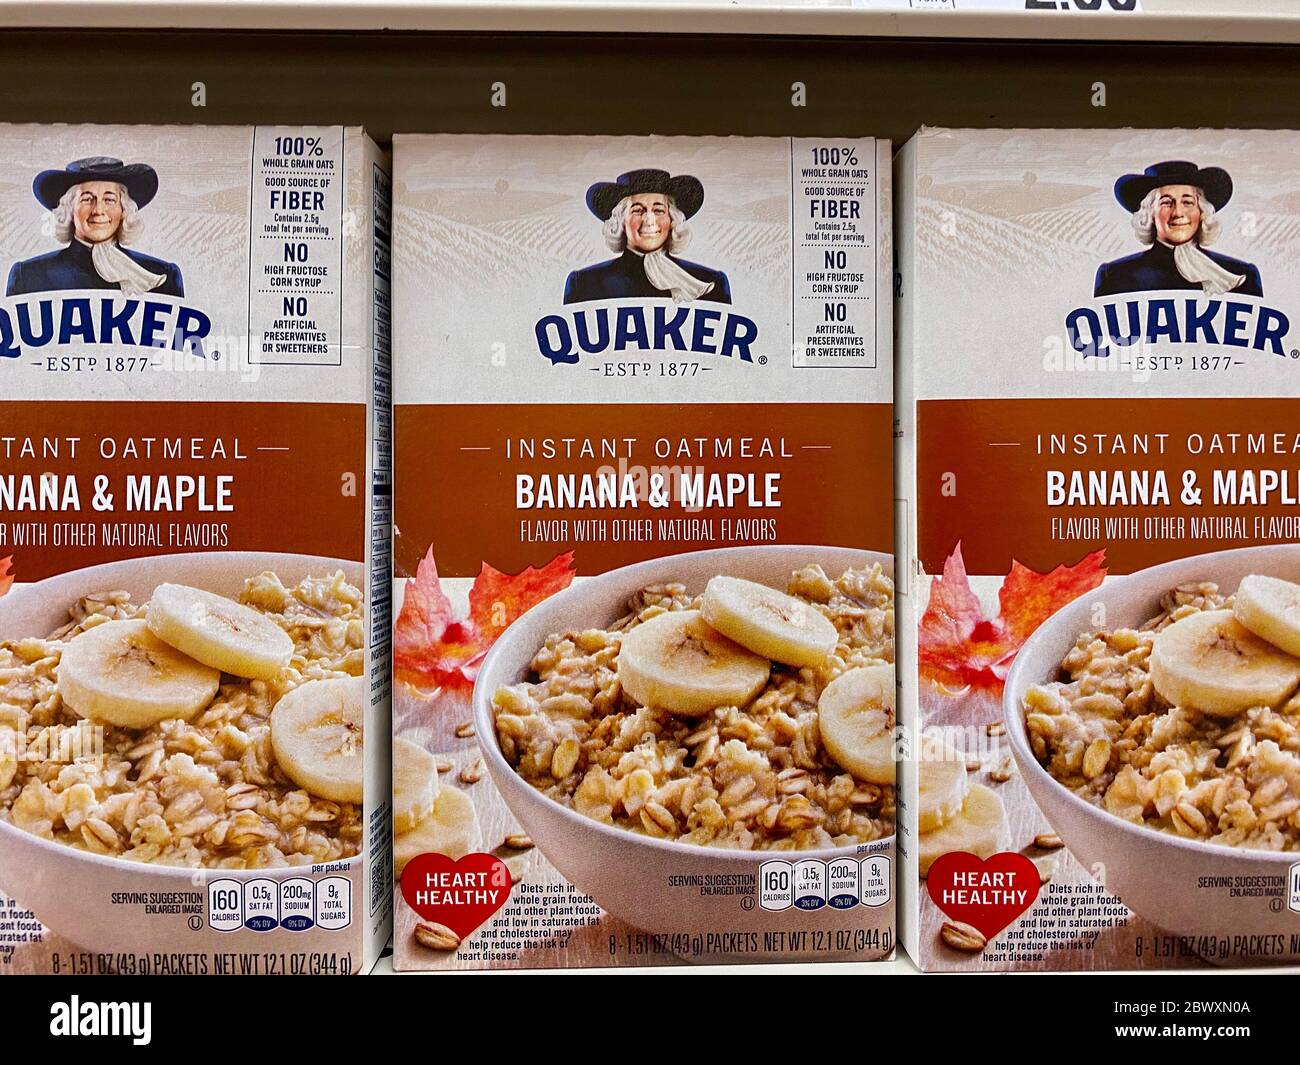 https://c8.alamy.com/comp/2BWXN0A/quaker-instant-oatmeal-boxes-on-a-store-shelf-2BWXN0A.jpg